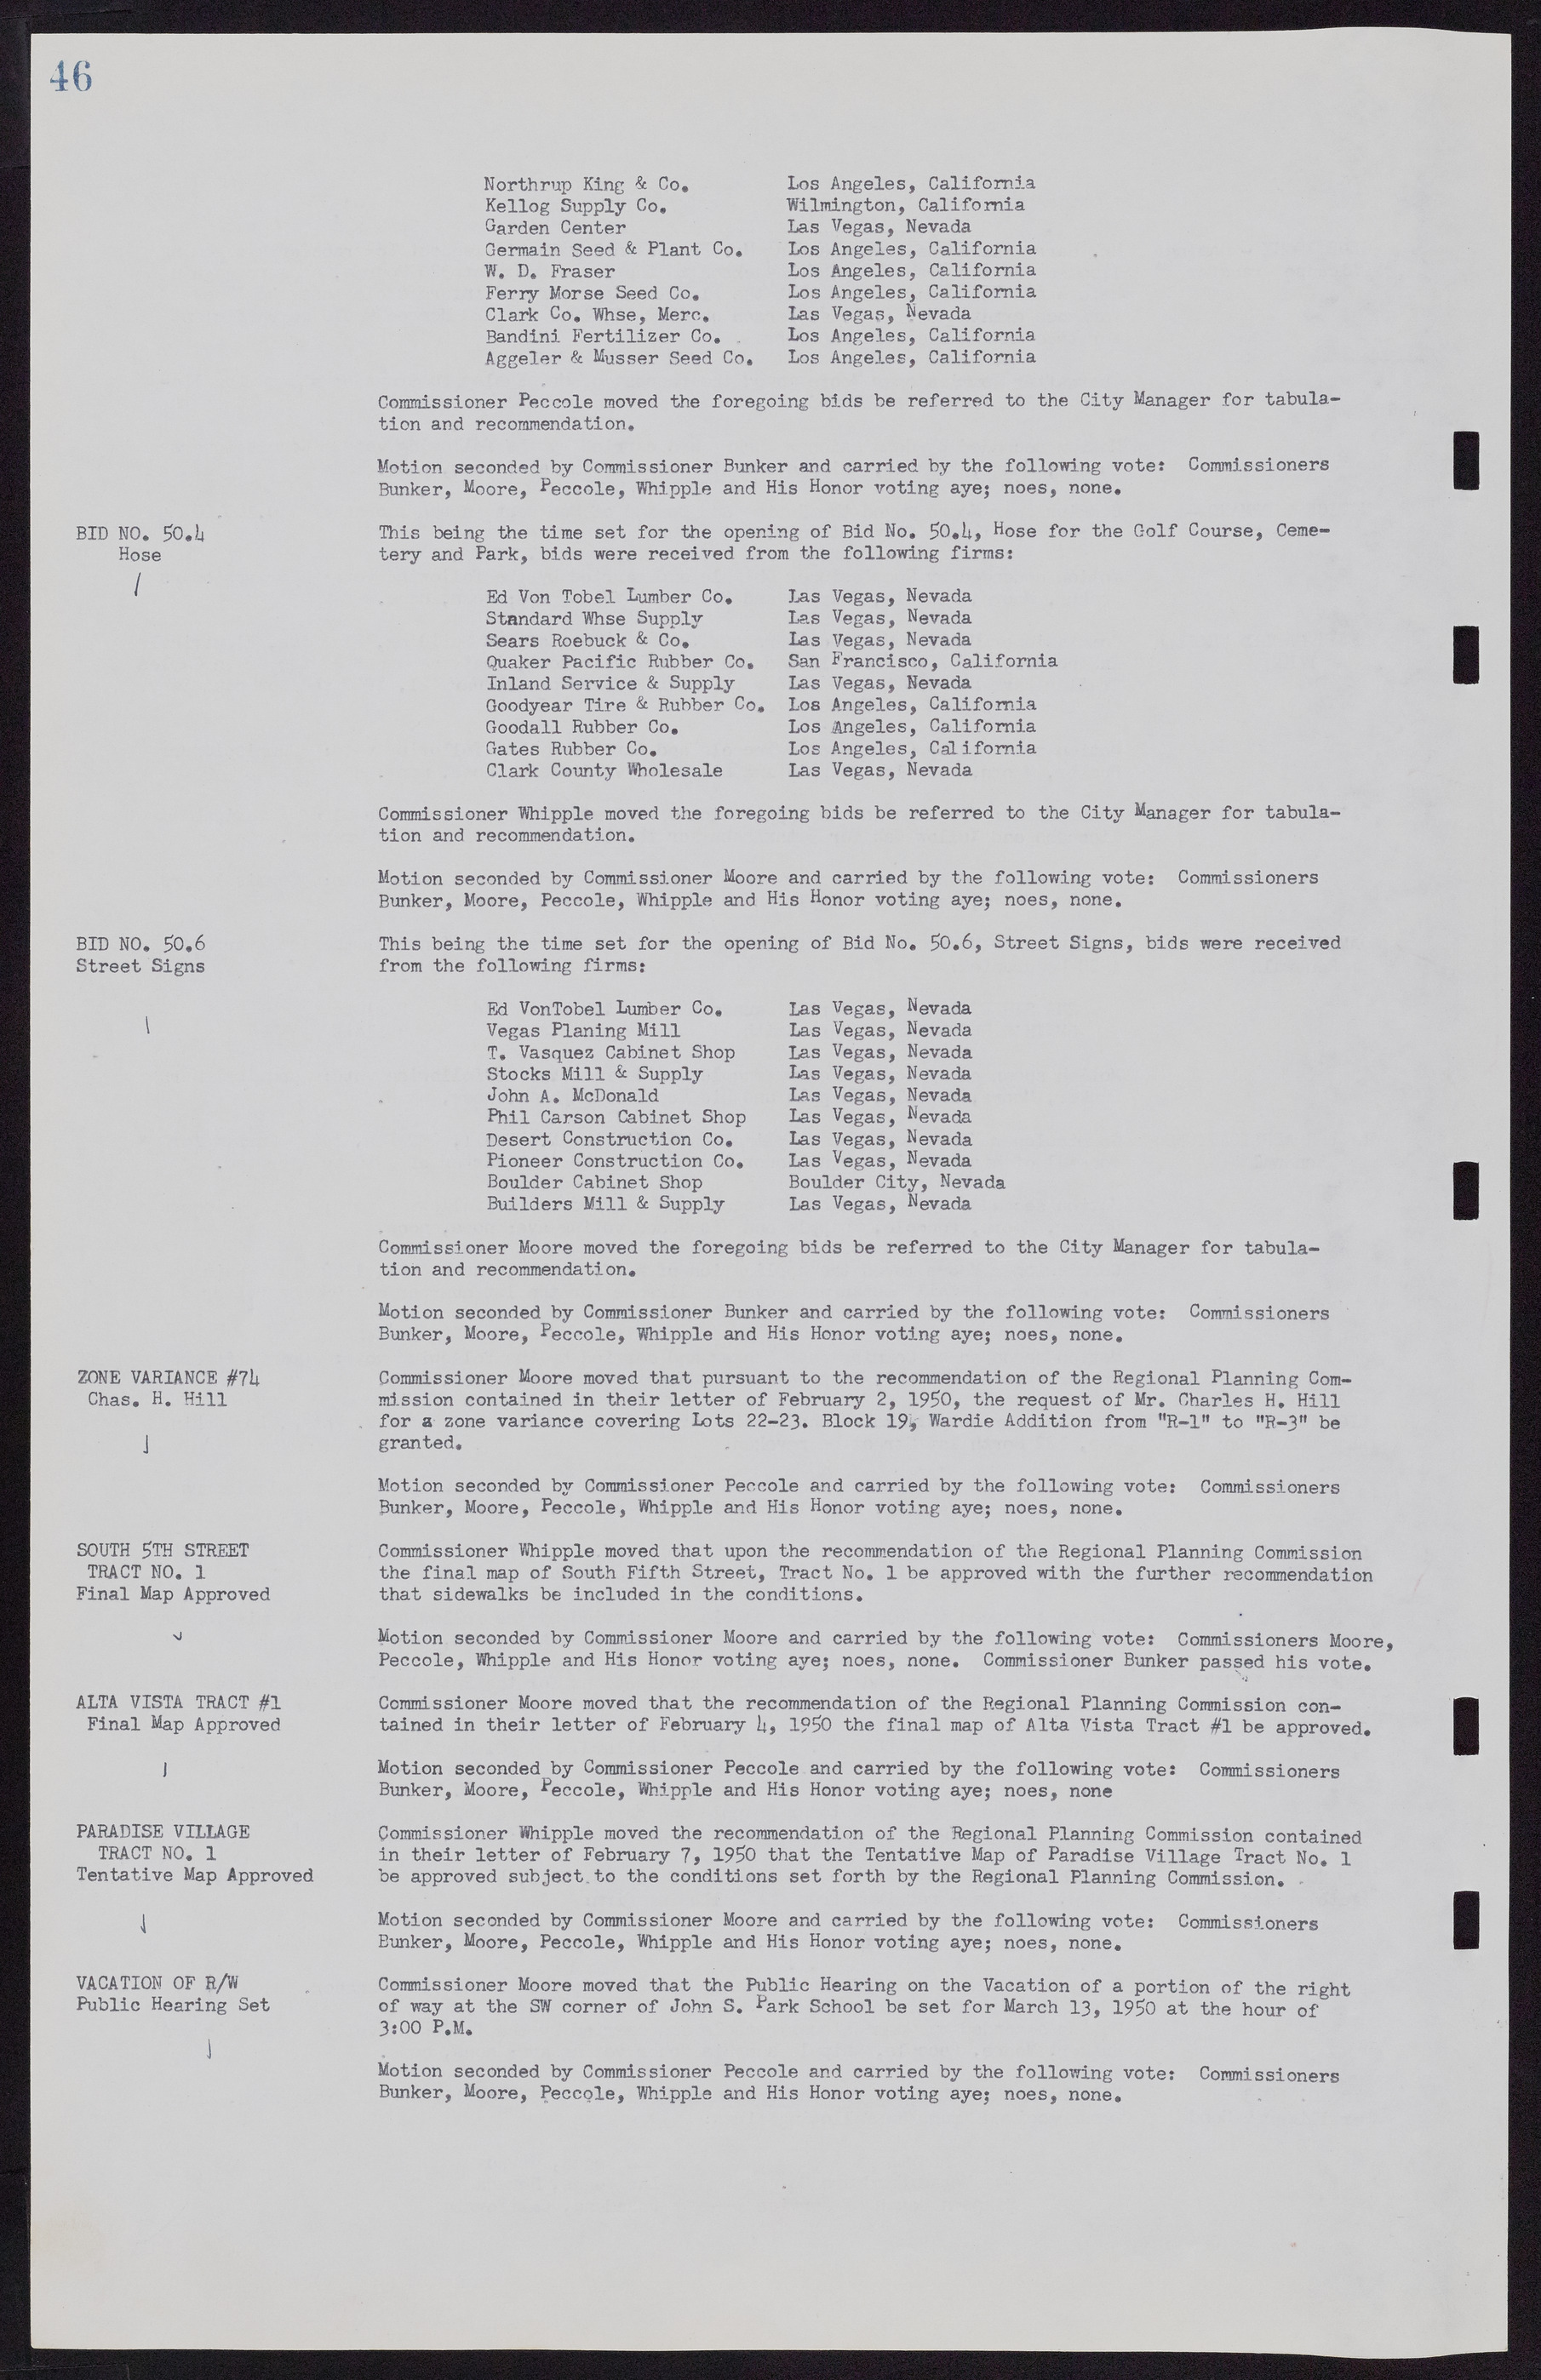 Las Vegas City Commission Minutes, November 7, 1949 to May 21, 1952, lvc000007-54